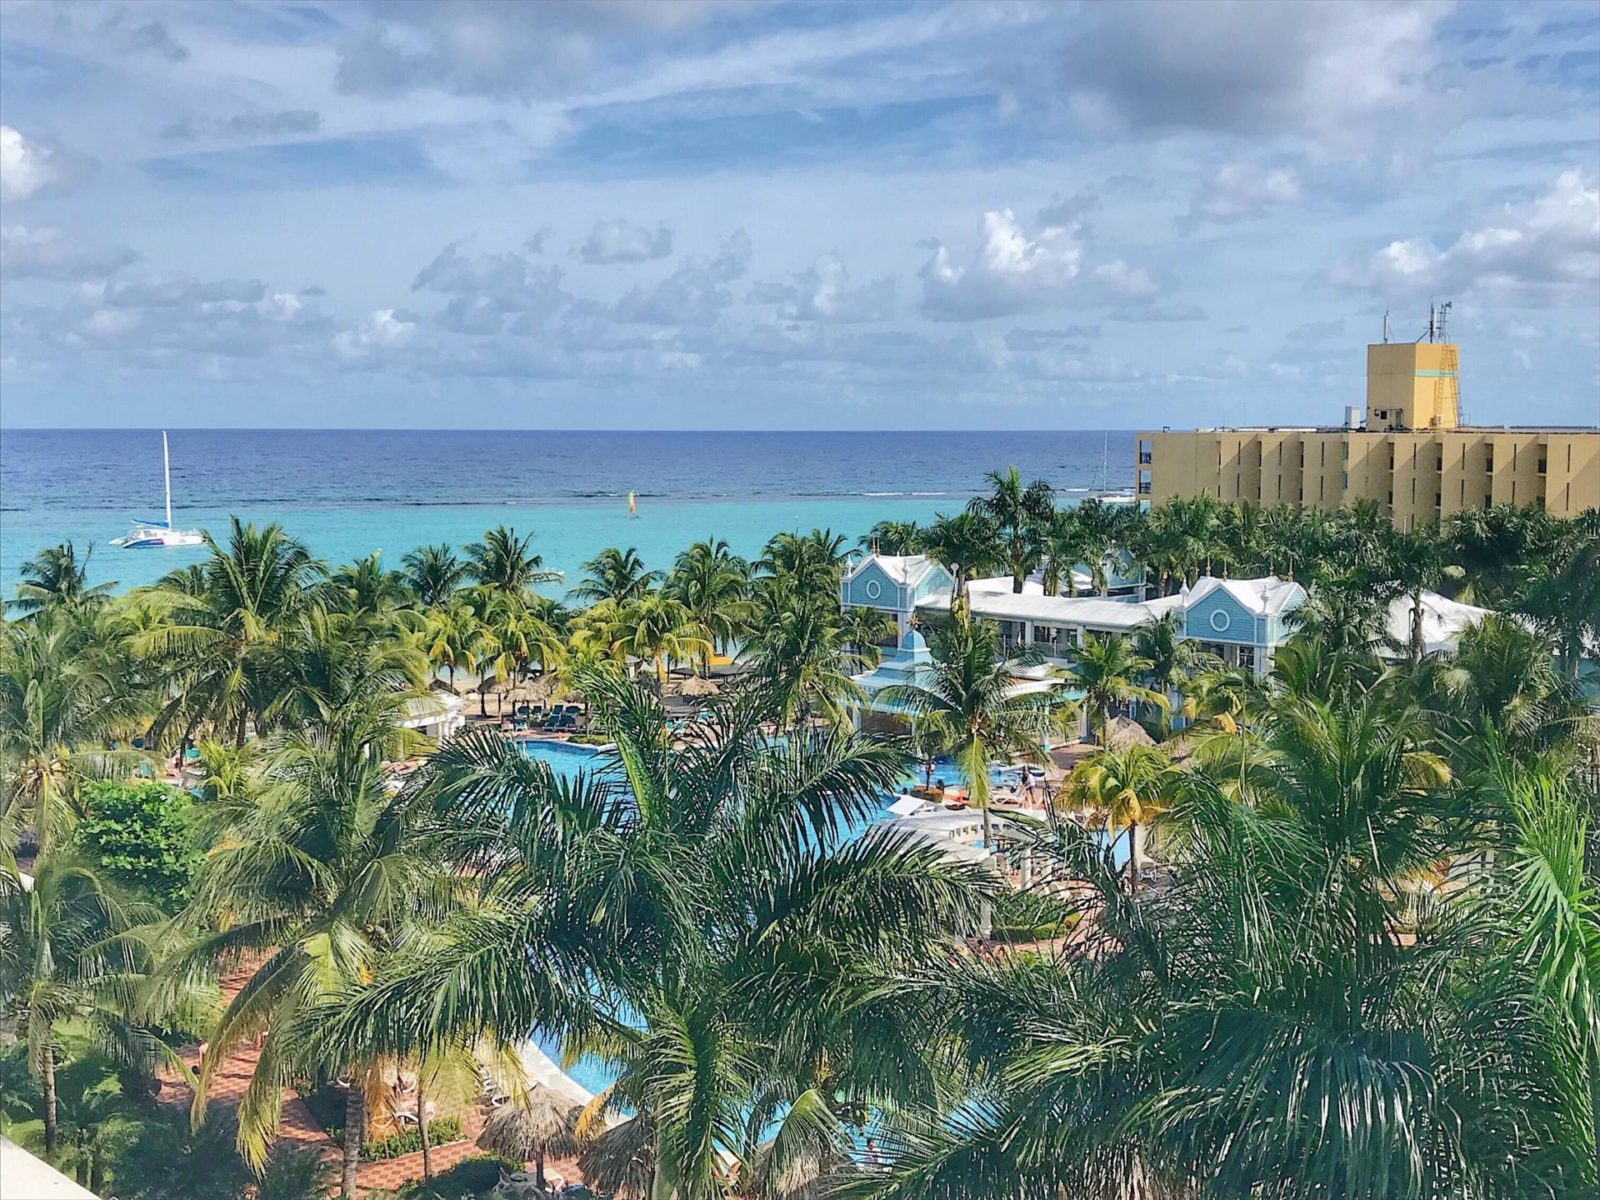 View from Riu hotel in Ocho Rios, Jamaica